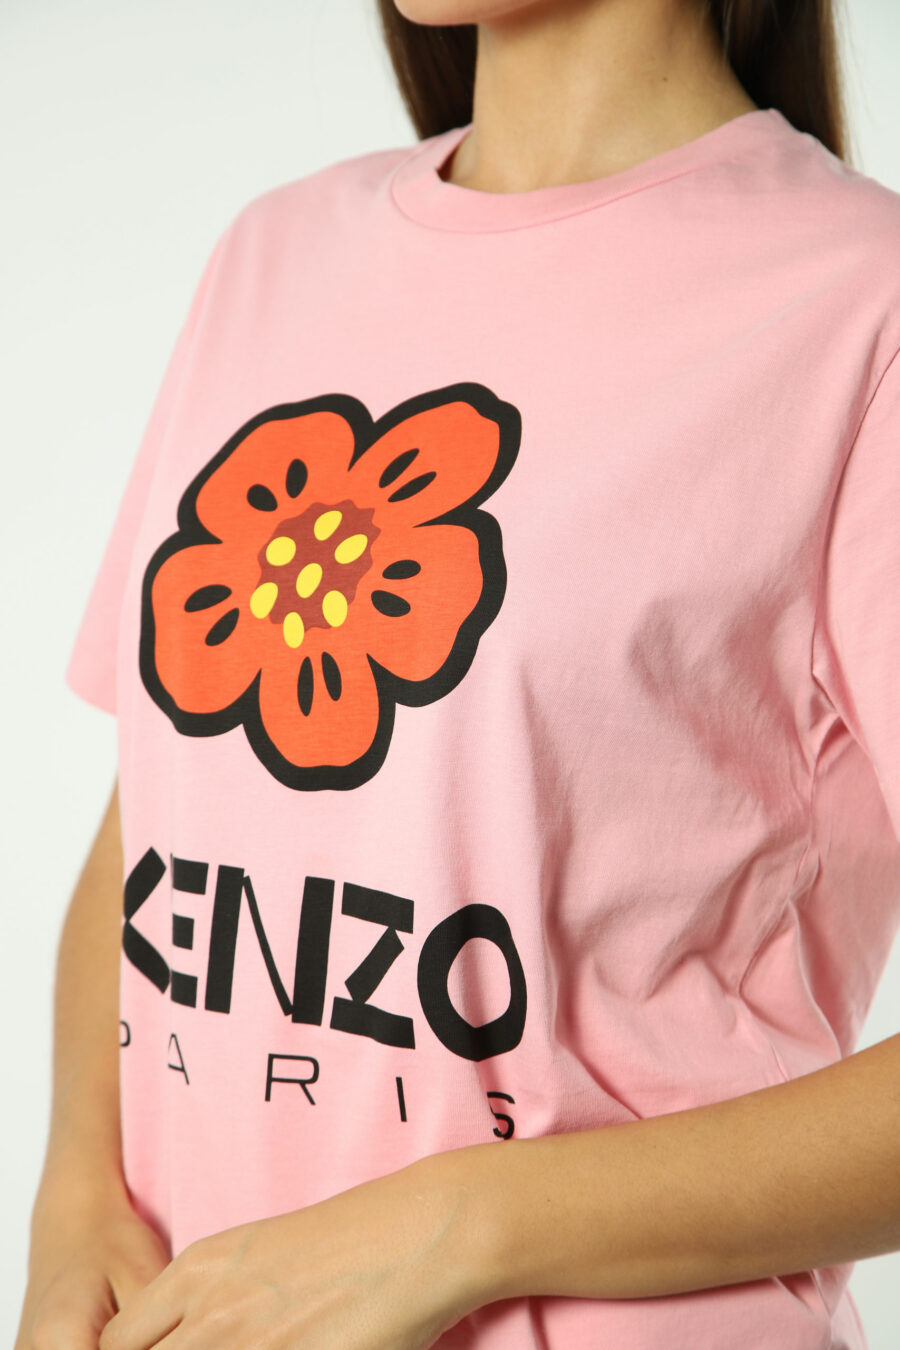 Rosa T-Shirt mit orangefarbener Blume maxilogo - Fotos 1405